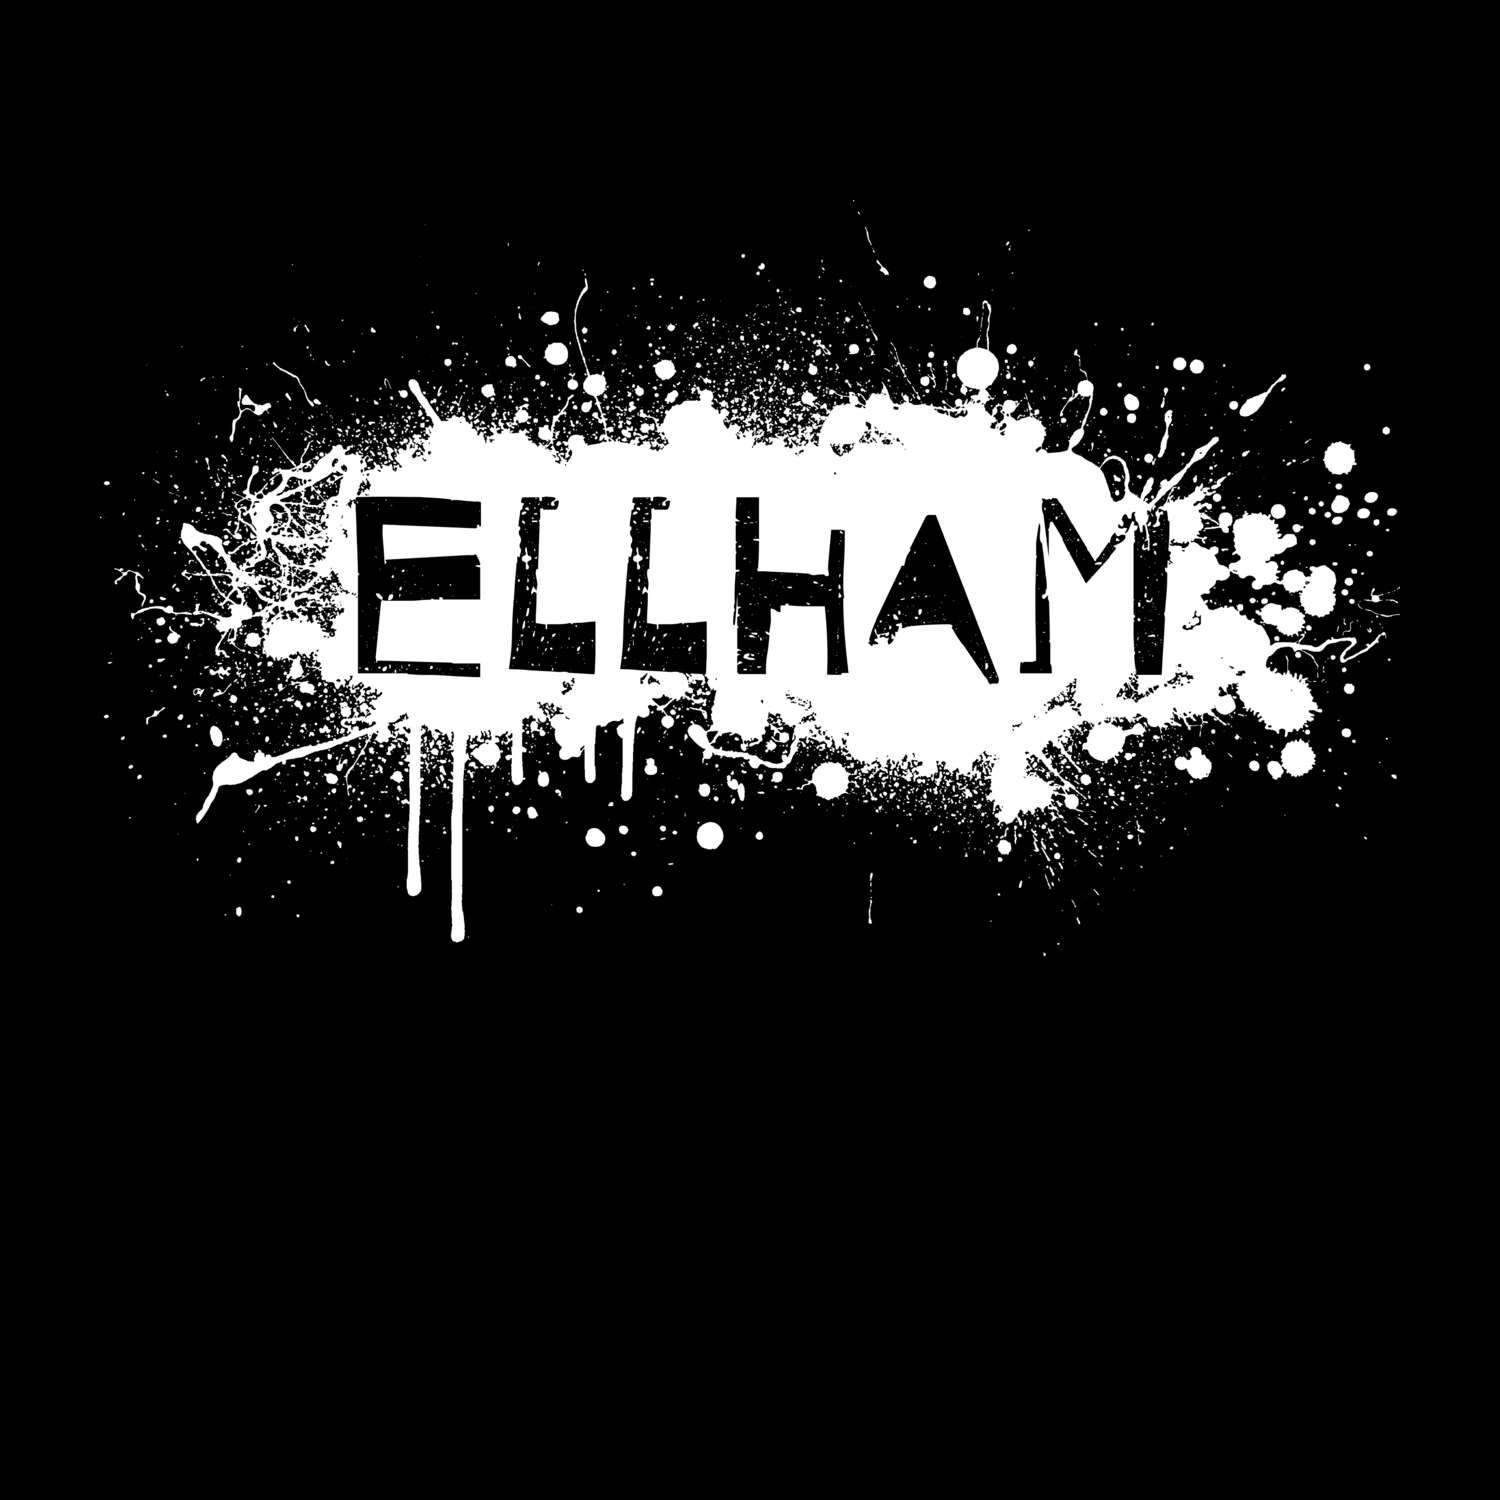 Ellham T-Shirt »Paint Splash Punk«